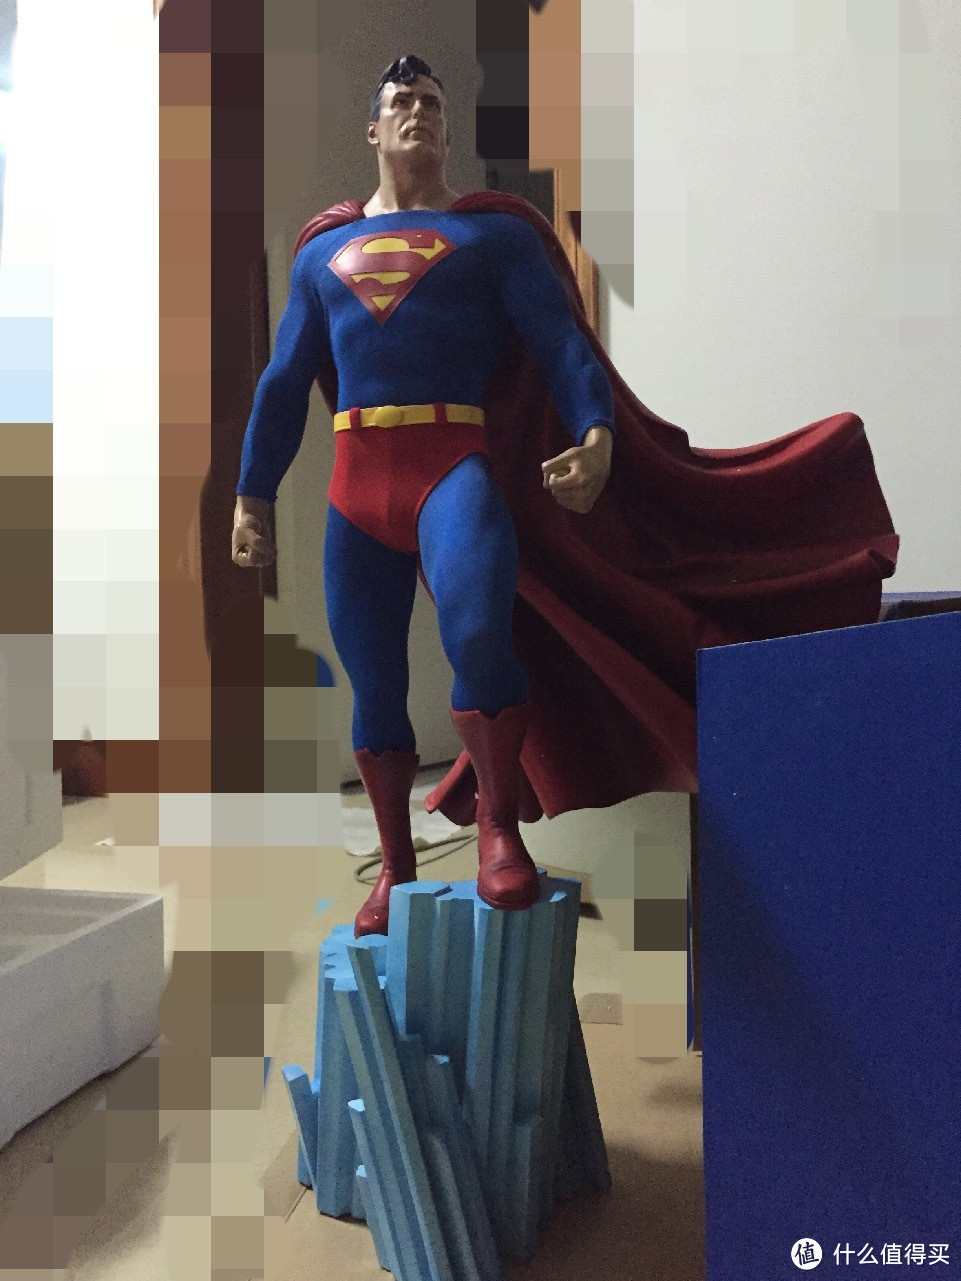 Sideshow 300215 1:4 Superman 超人全身像